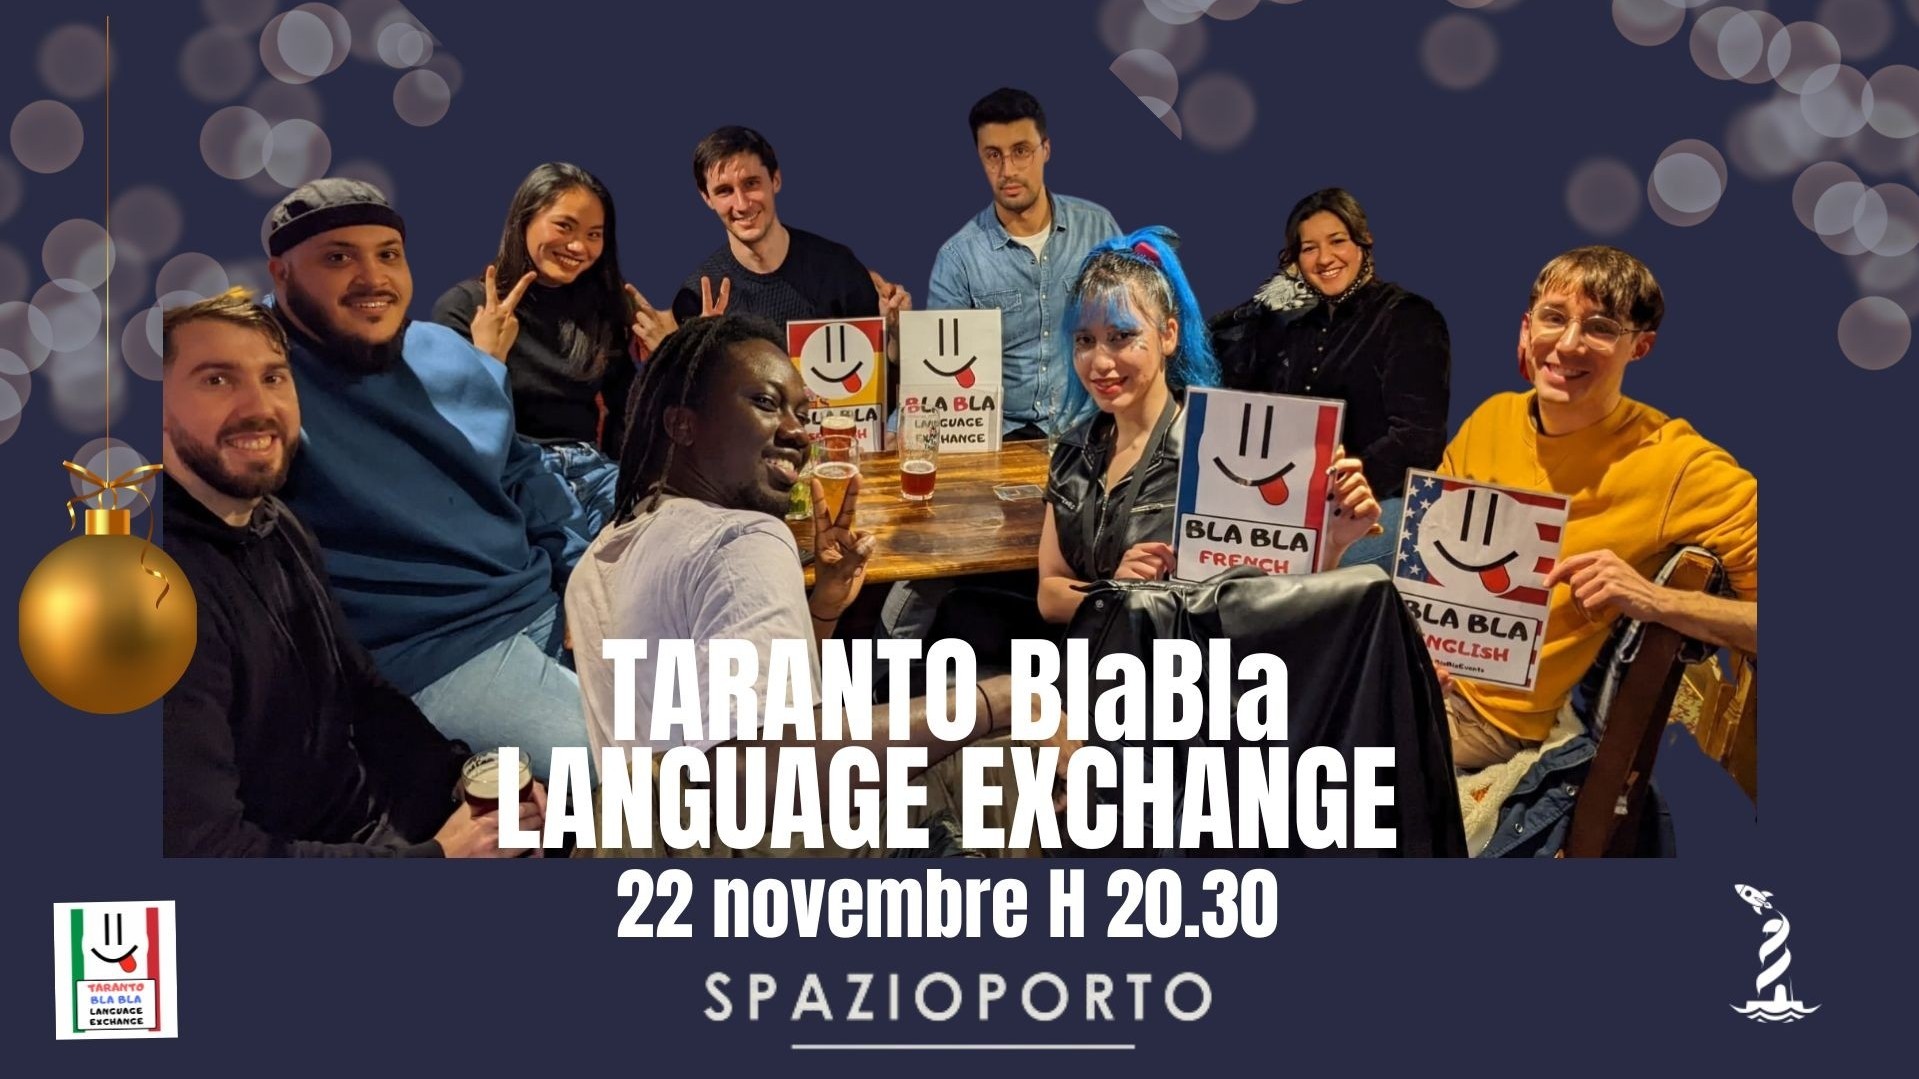 Blabla Language Exchange